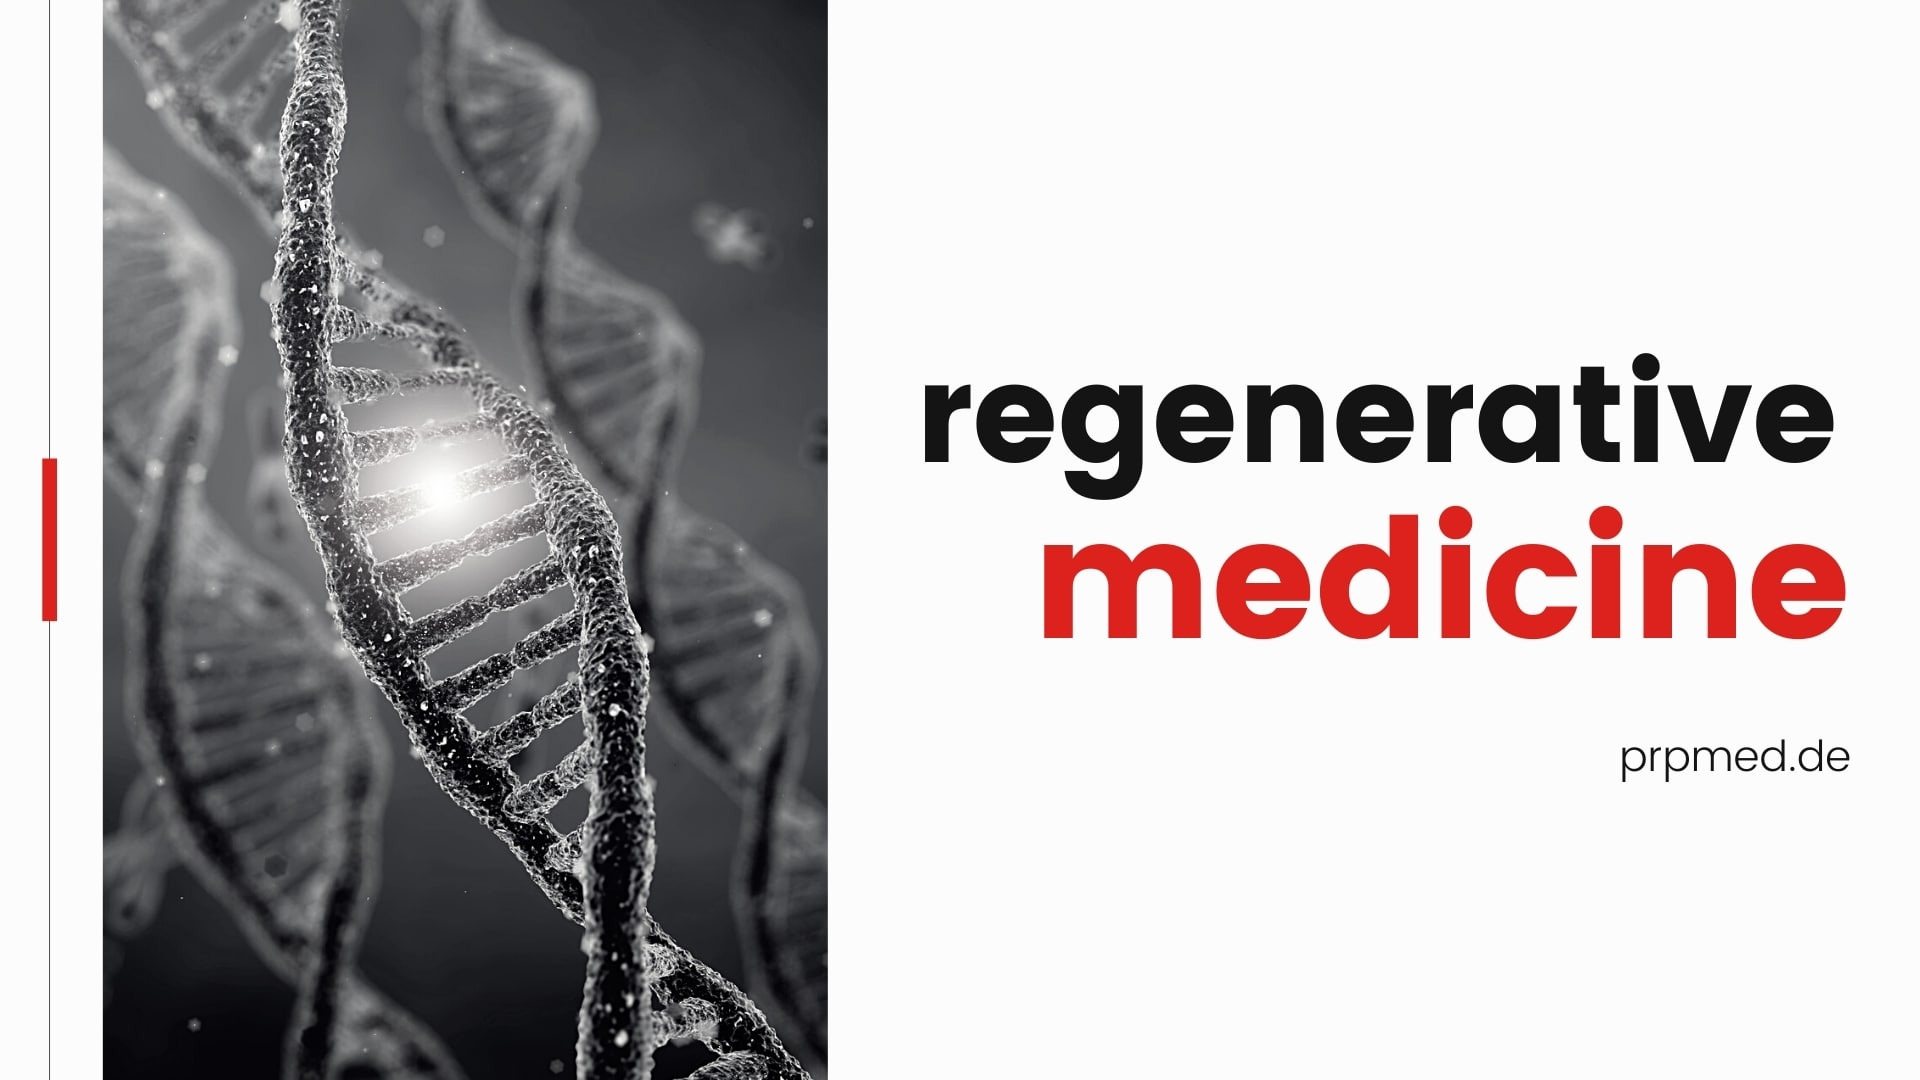 ¿Qué es la medicina regenerativa?